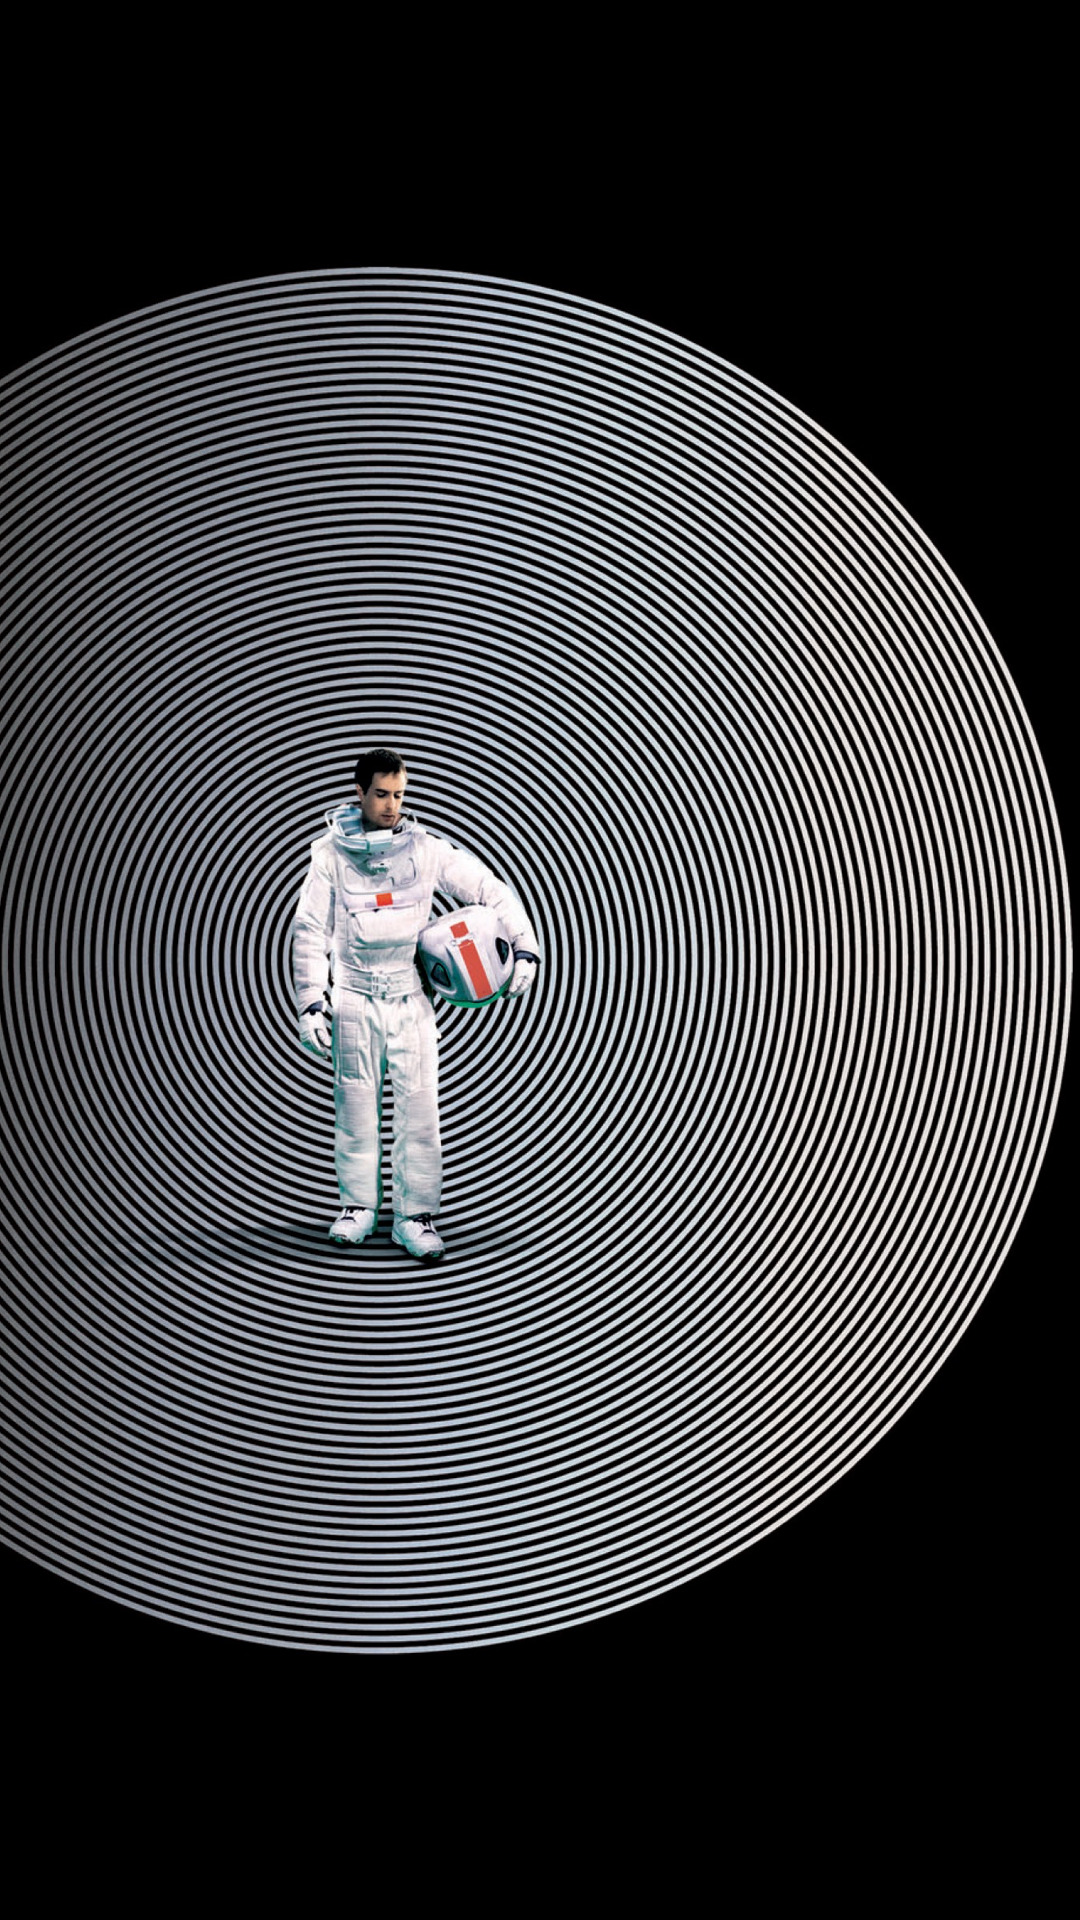 digital Art, Portrait Display, CGI, Men, Actor, Sam Rockwell, Moon, Movies, Movie Poster, Science Fiction, Astronaut, Spacesuit, Helmet, Circle, Black Background Wallpaper